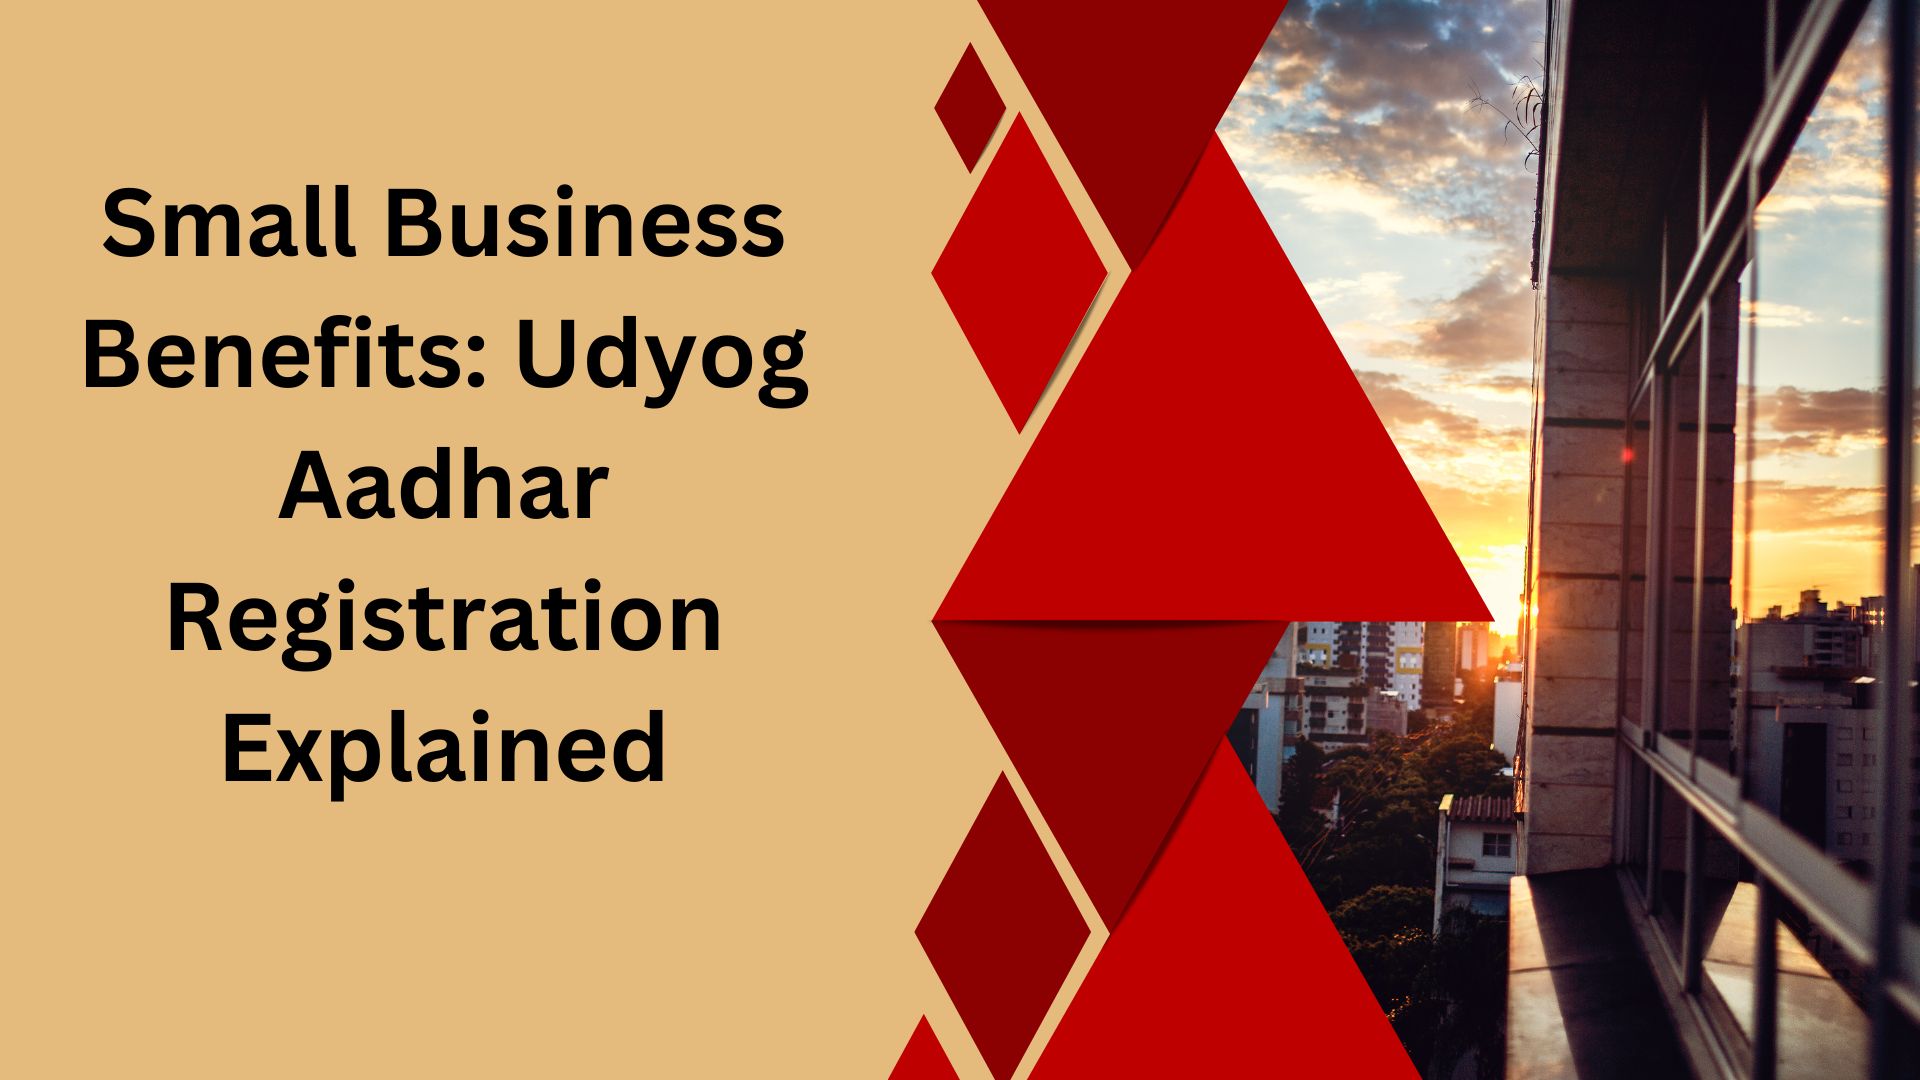 Small Business Benefits: Udyog Aadhar Registration Explained